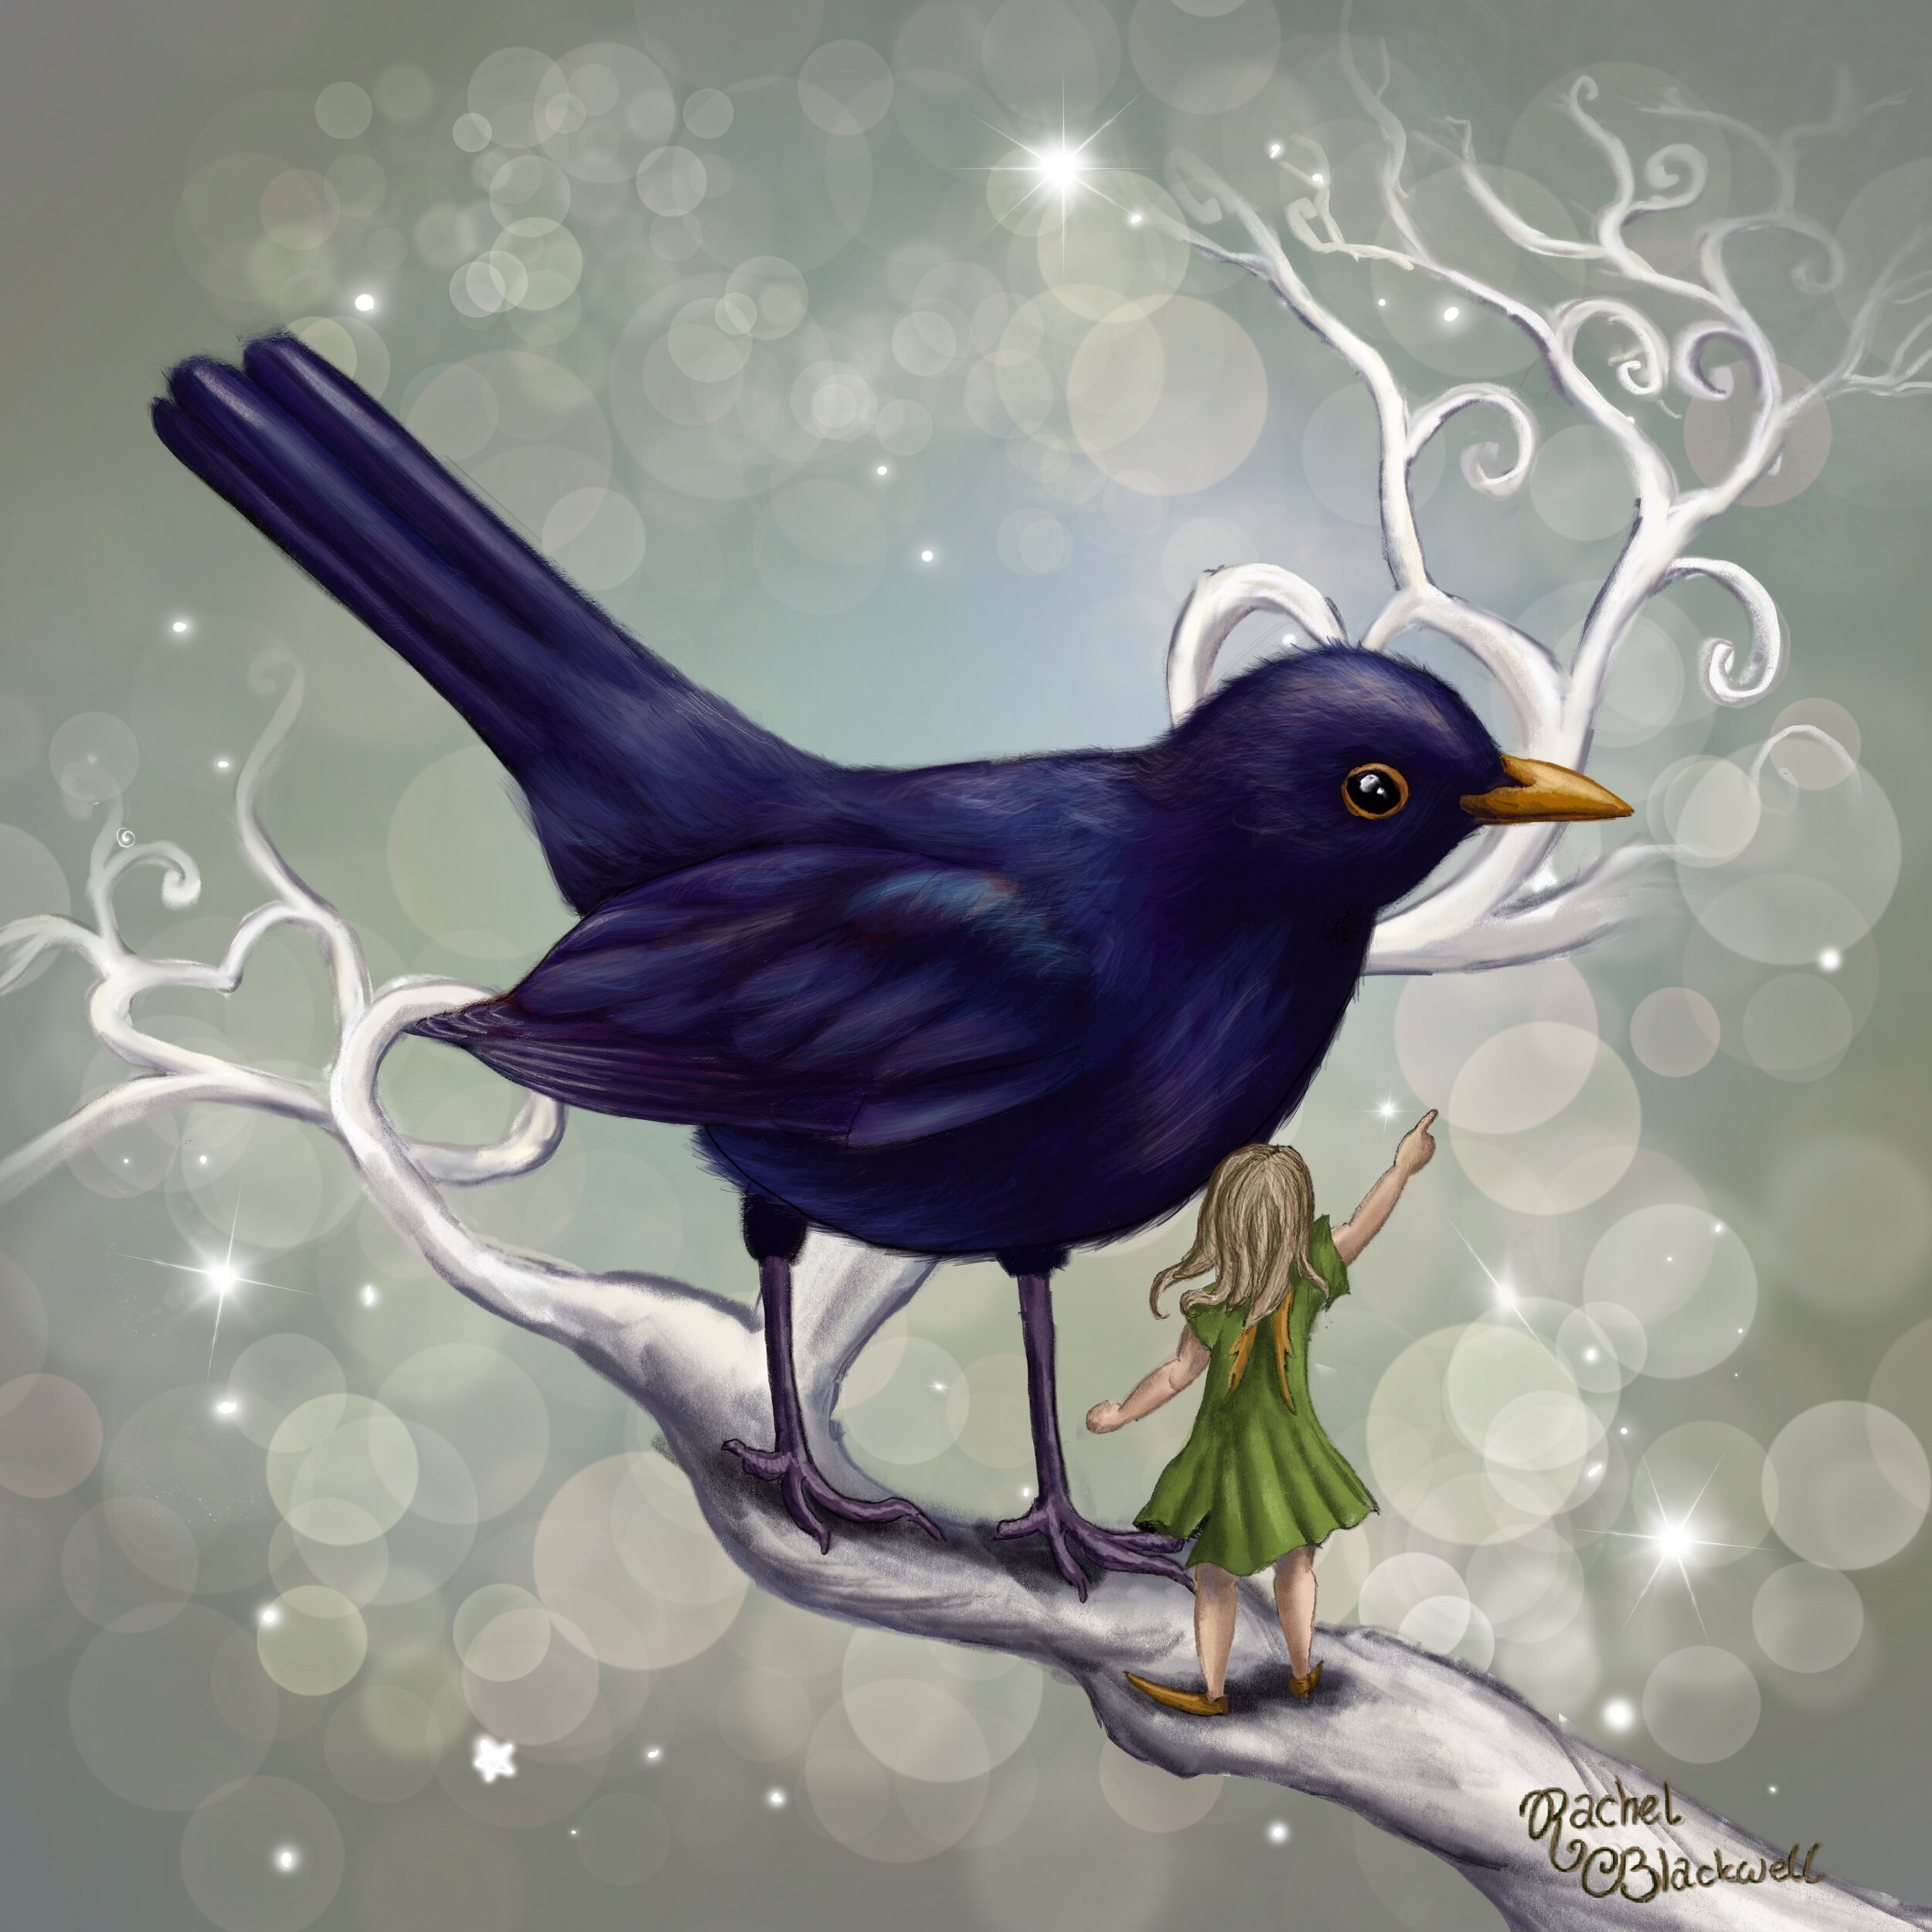 The fairy and the blackbird